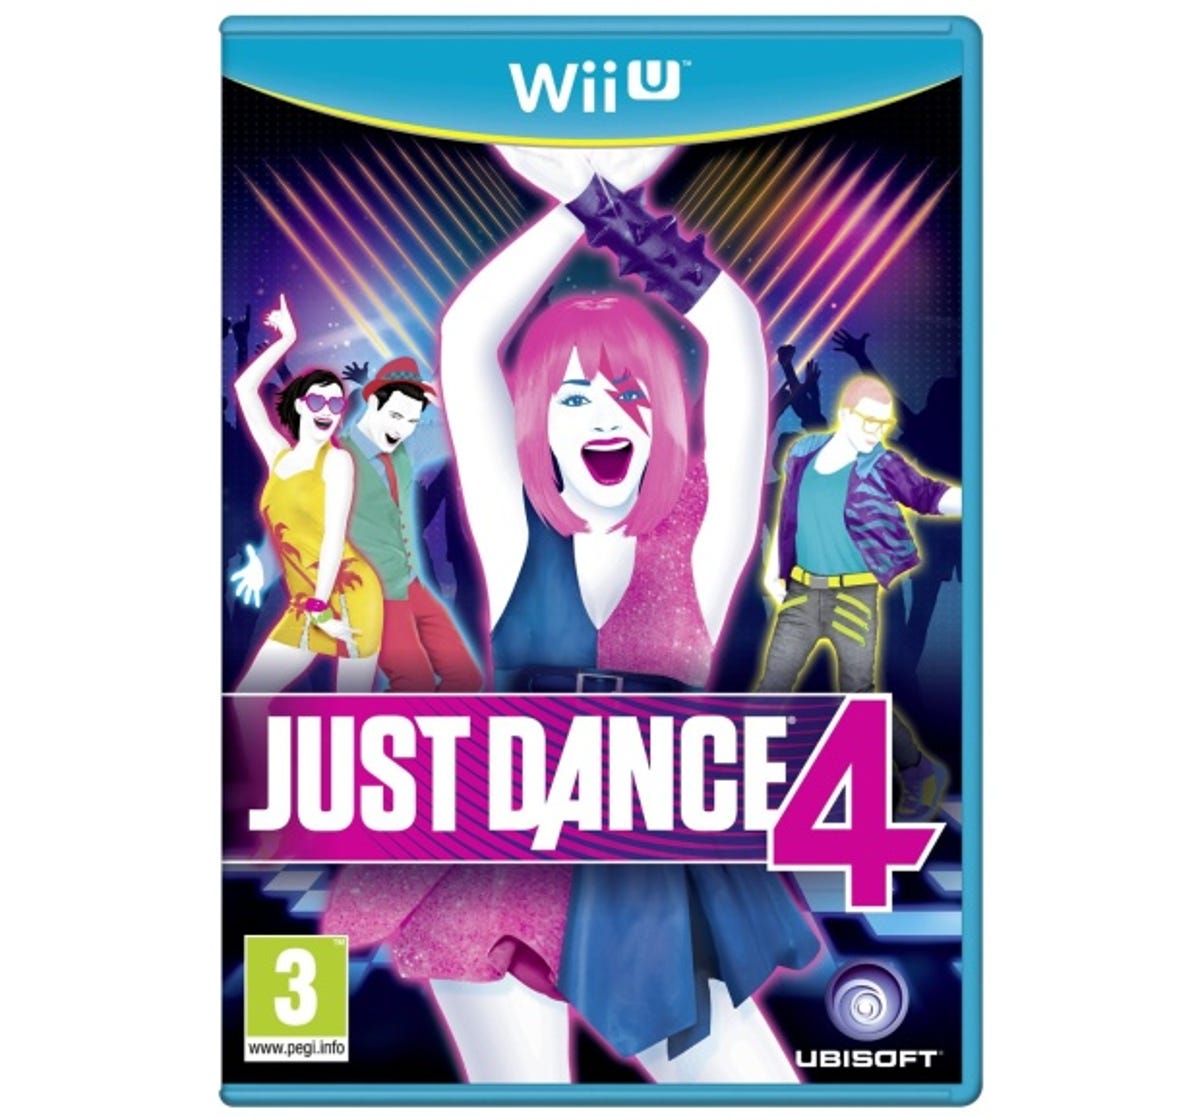 Ubisoft
Just Dance 4